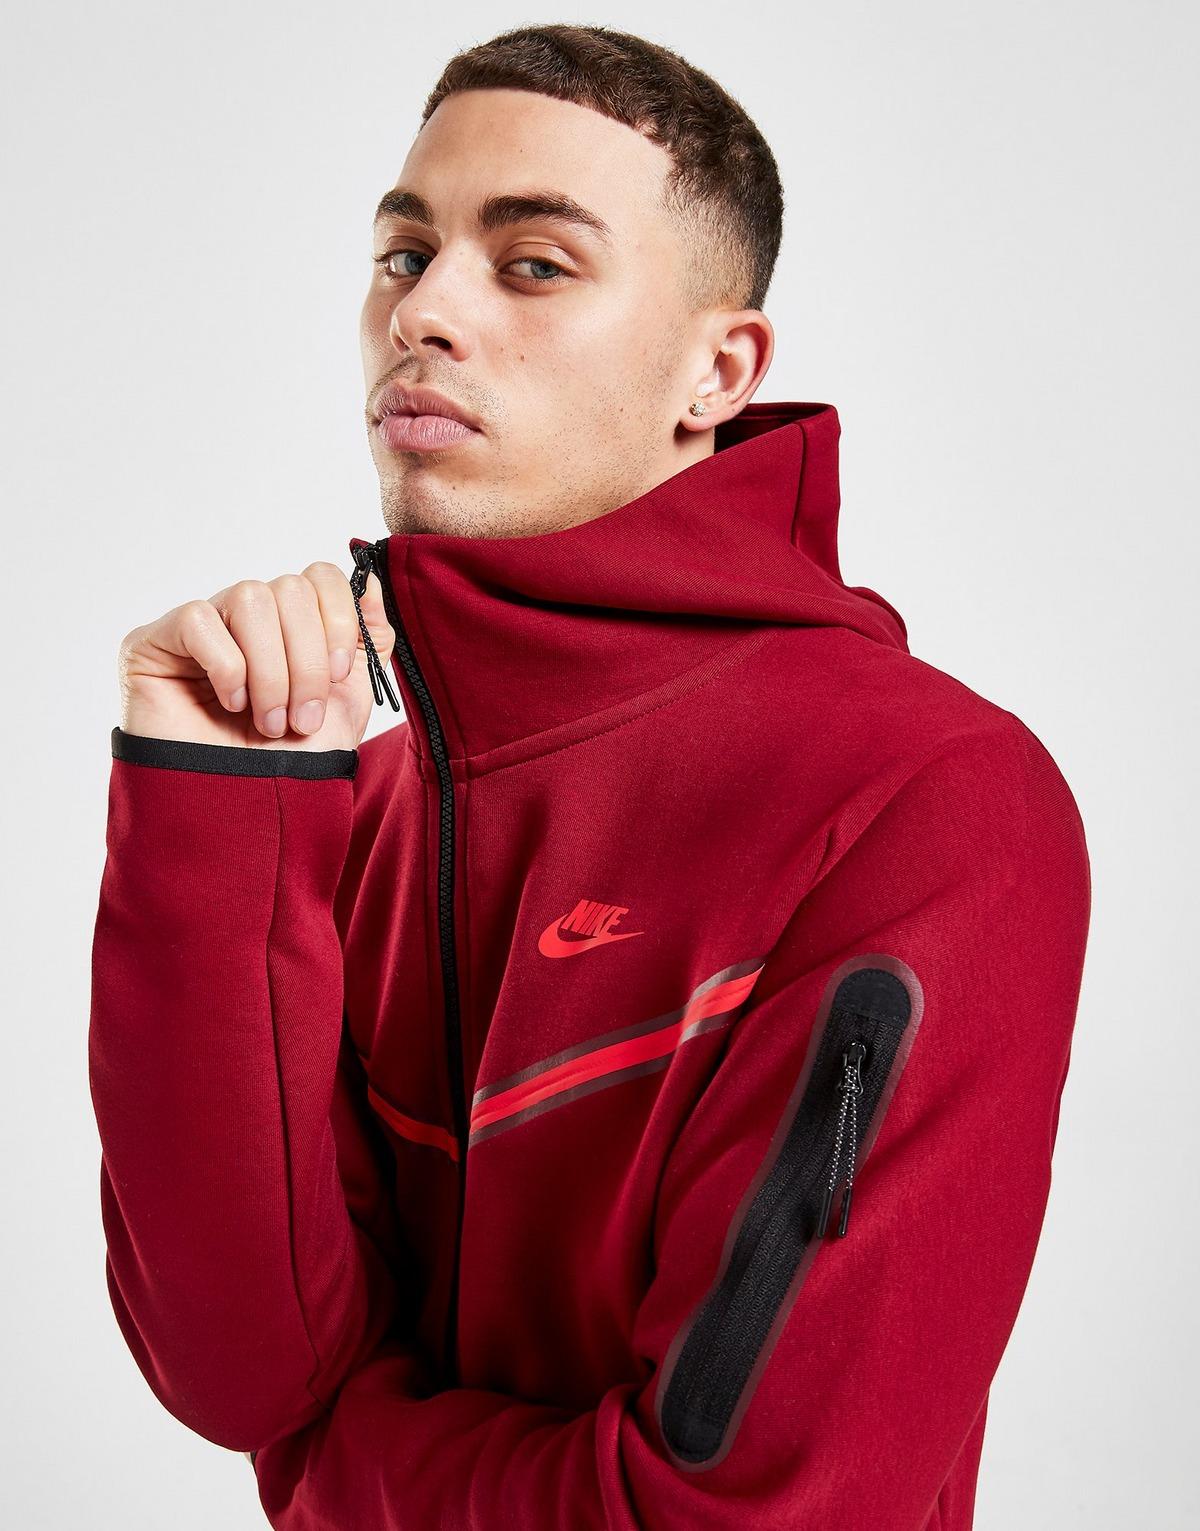 Nike Tech Fleece Full Zip Hoodie in Red for Men - Lyst